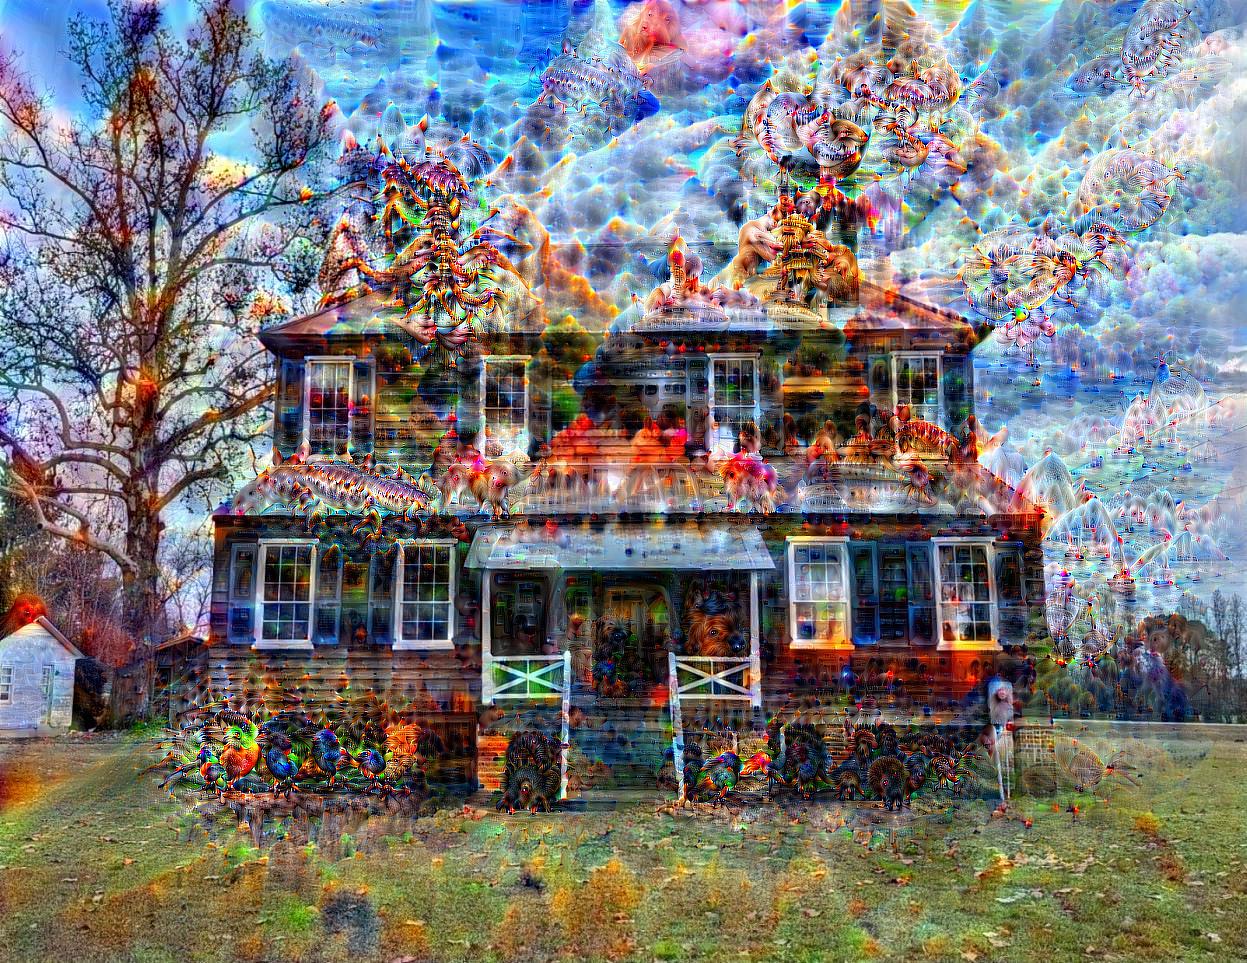 Haunted? House